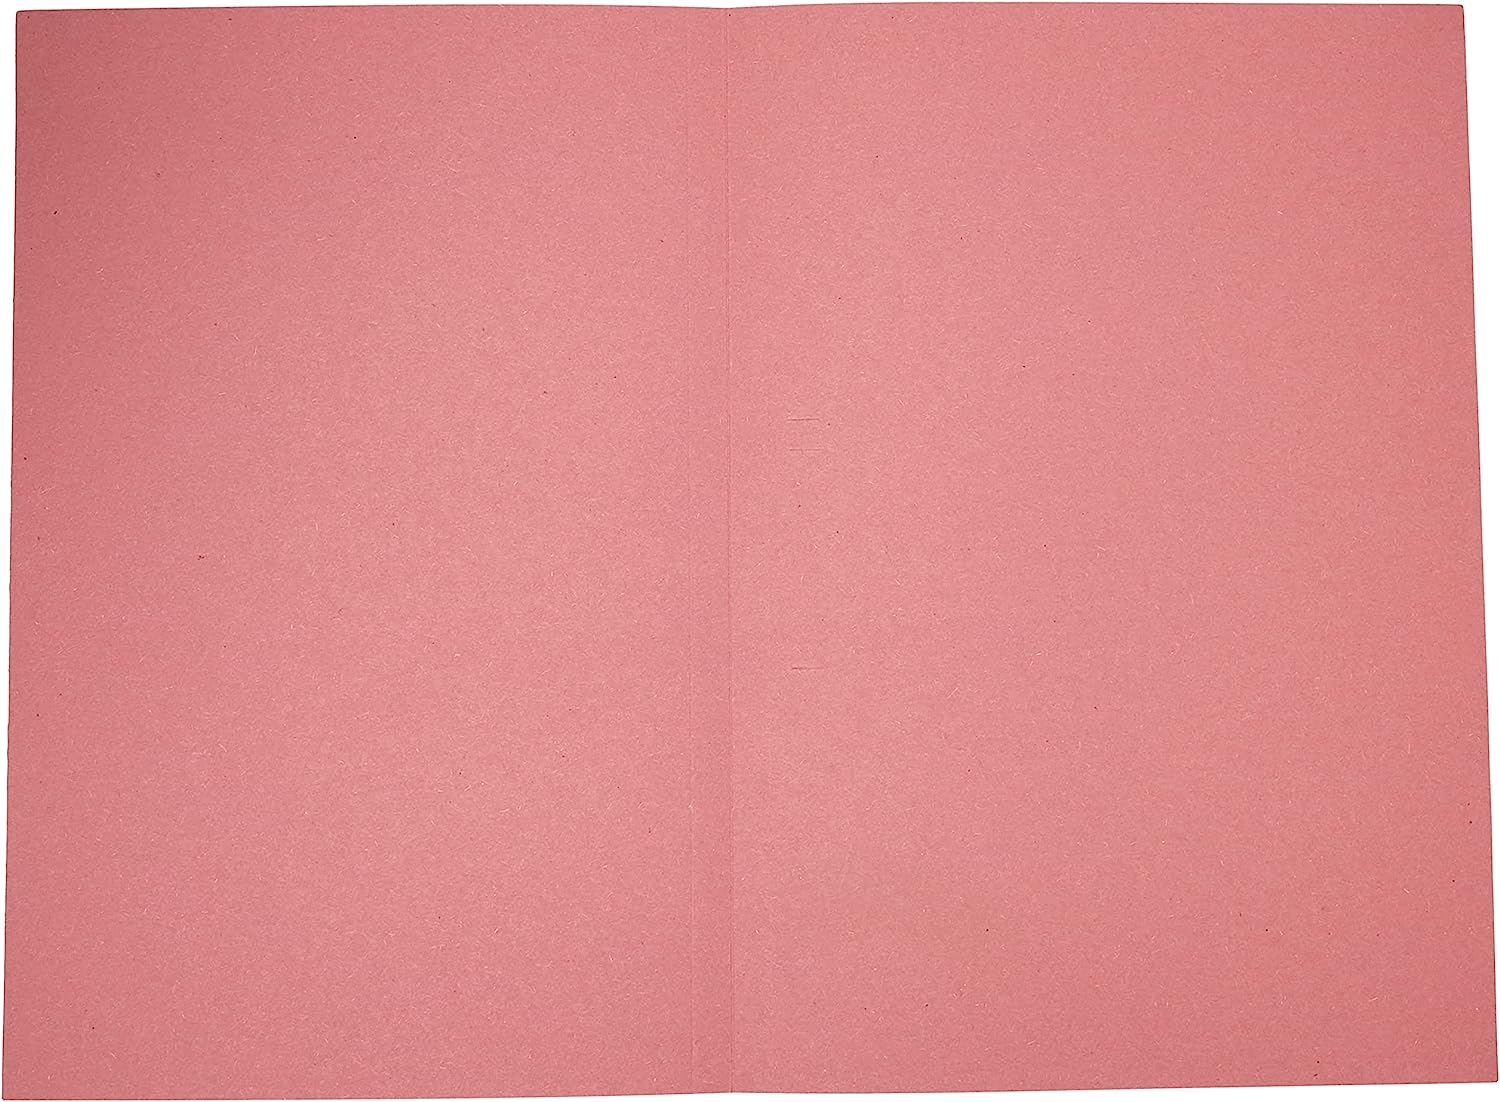 Pack of 100 Mediumweight 250gsm Foolscap Pink Square Cut Folders